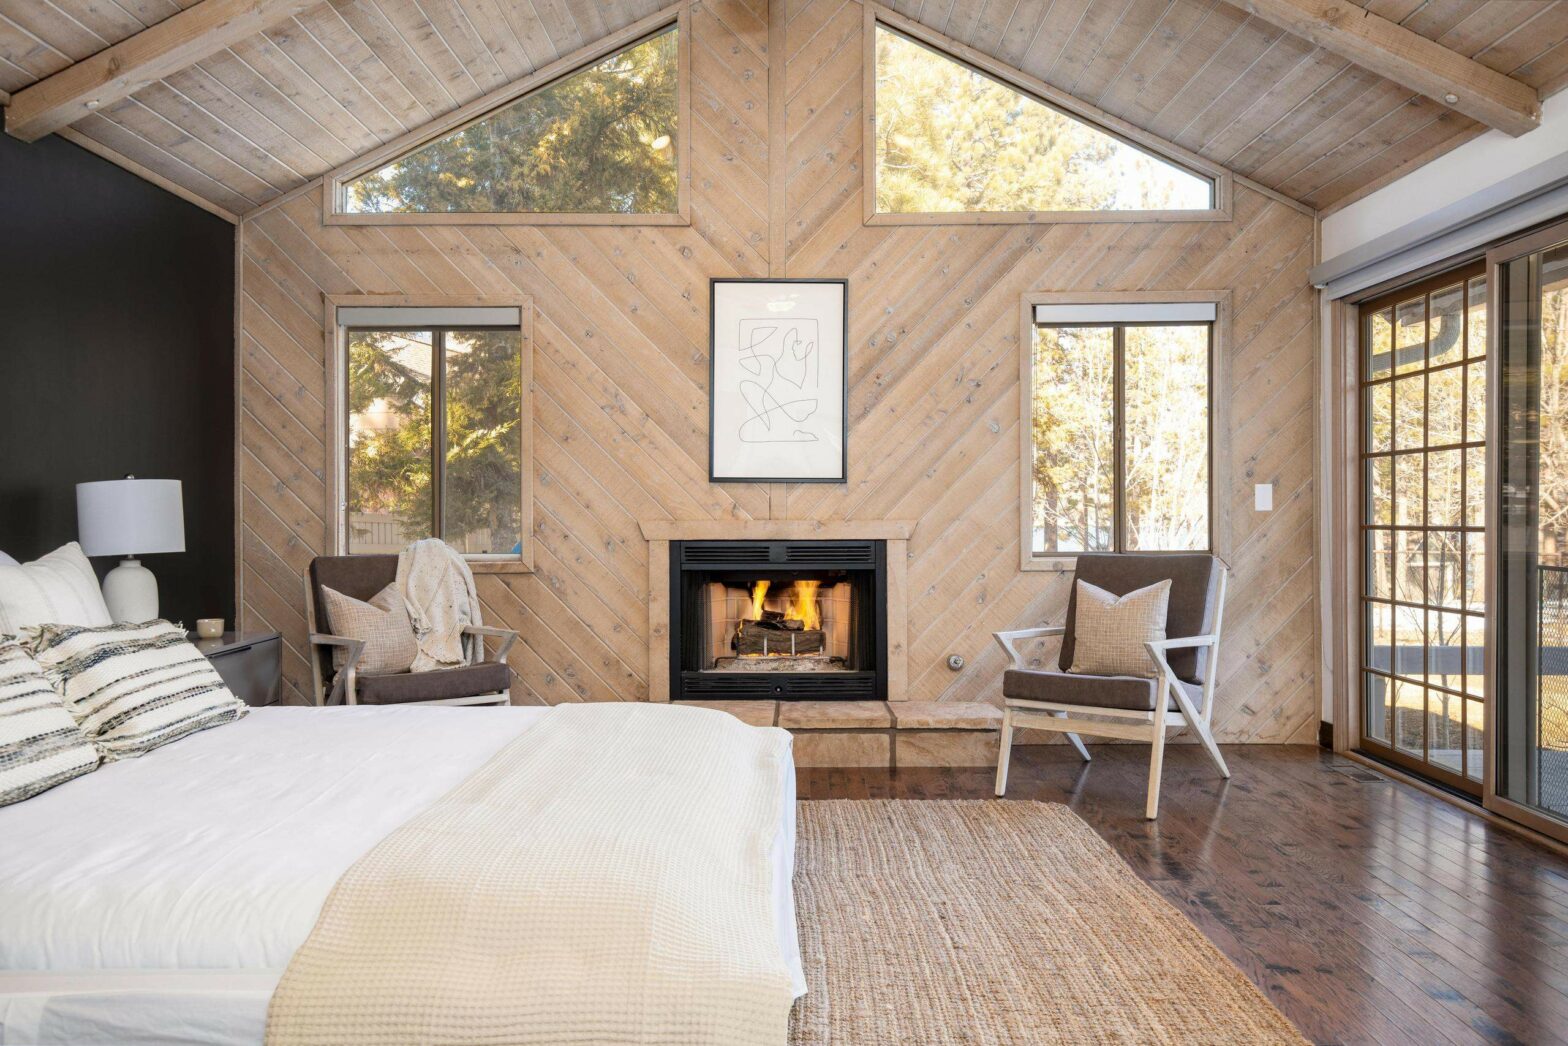 Bedroom in AvantStay Big Bear vacation rental home